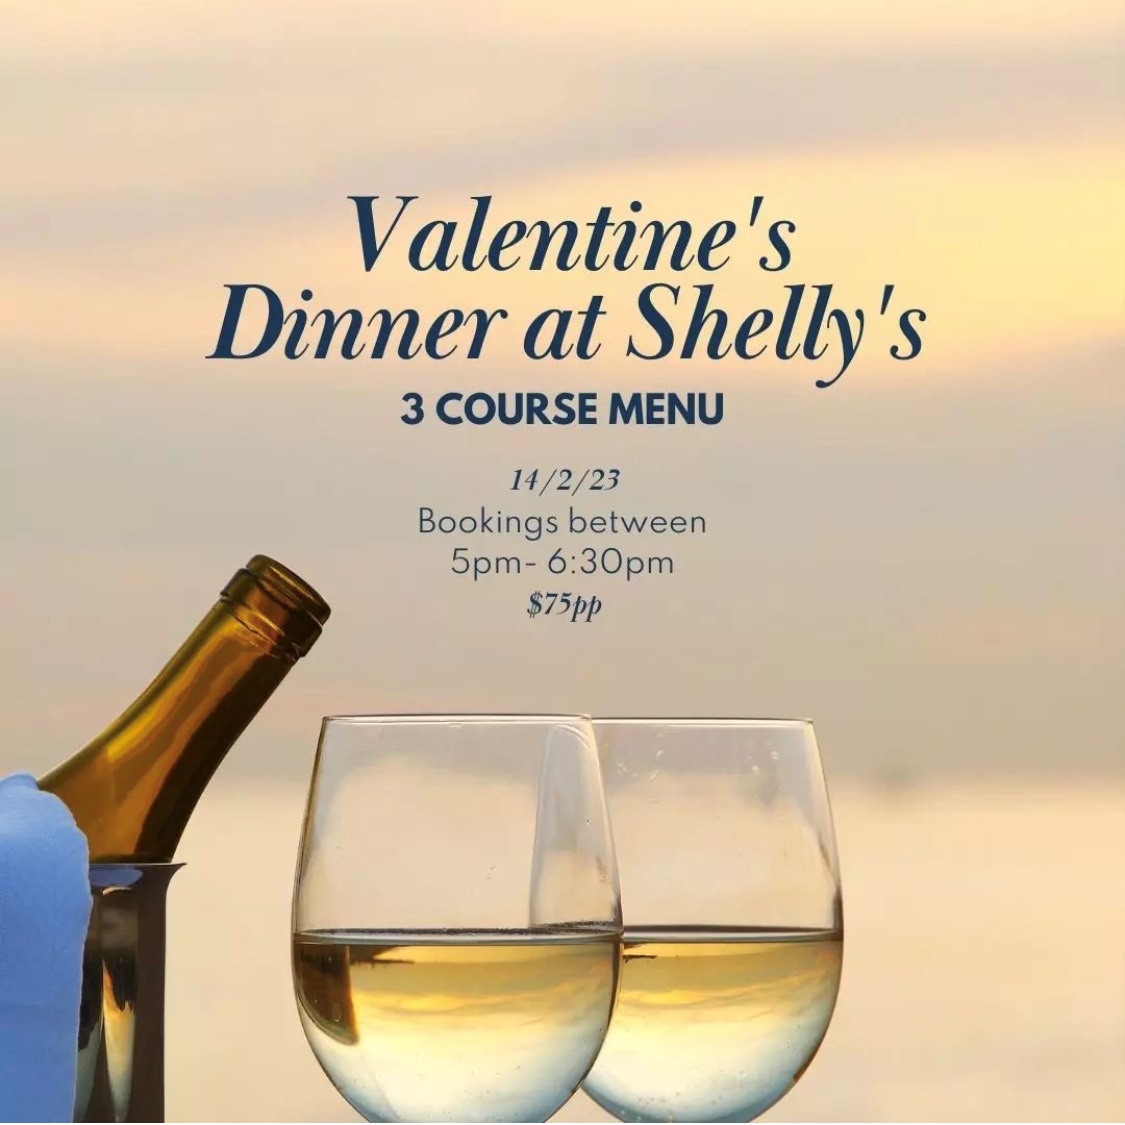 Valentines Dinner at Shellys